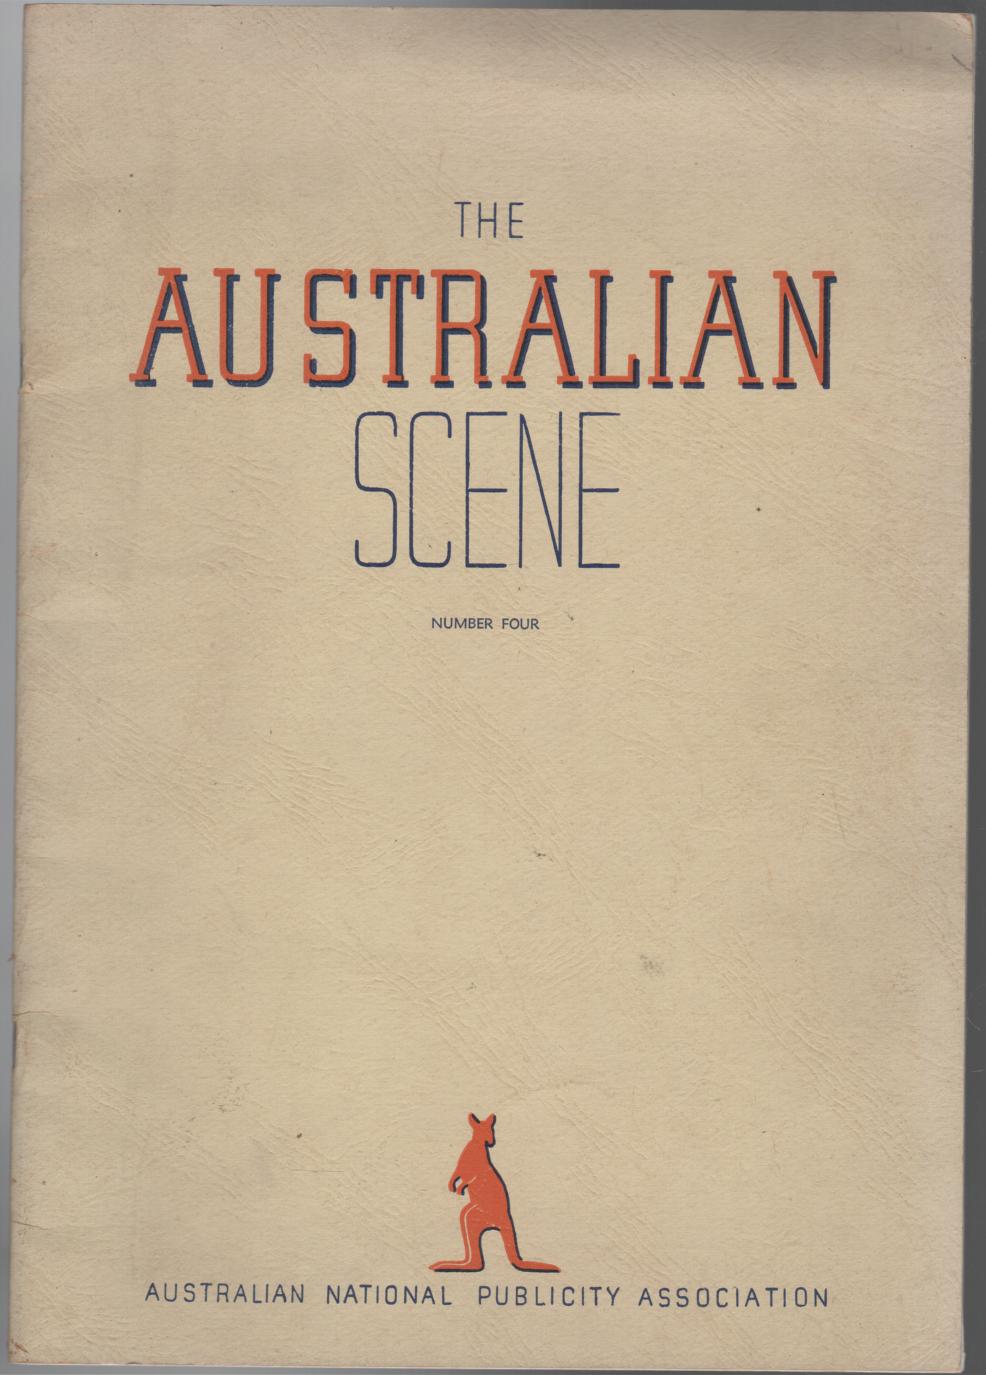 AUSTRALIAN NATIONAL PUBLICITY ASSOCIATION. - The Australian Scene. Number Four.